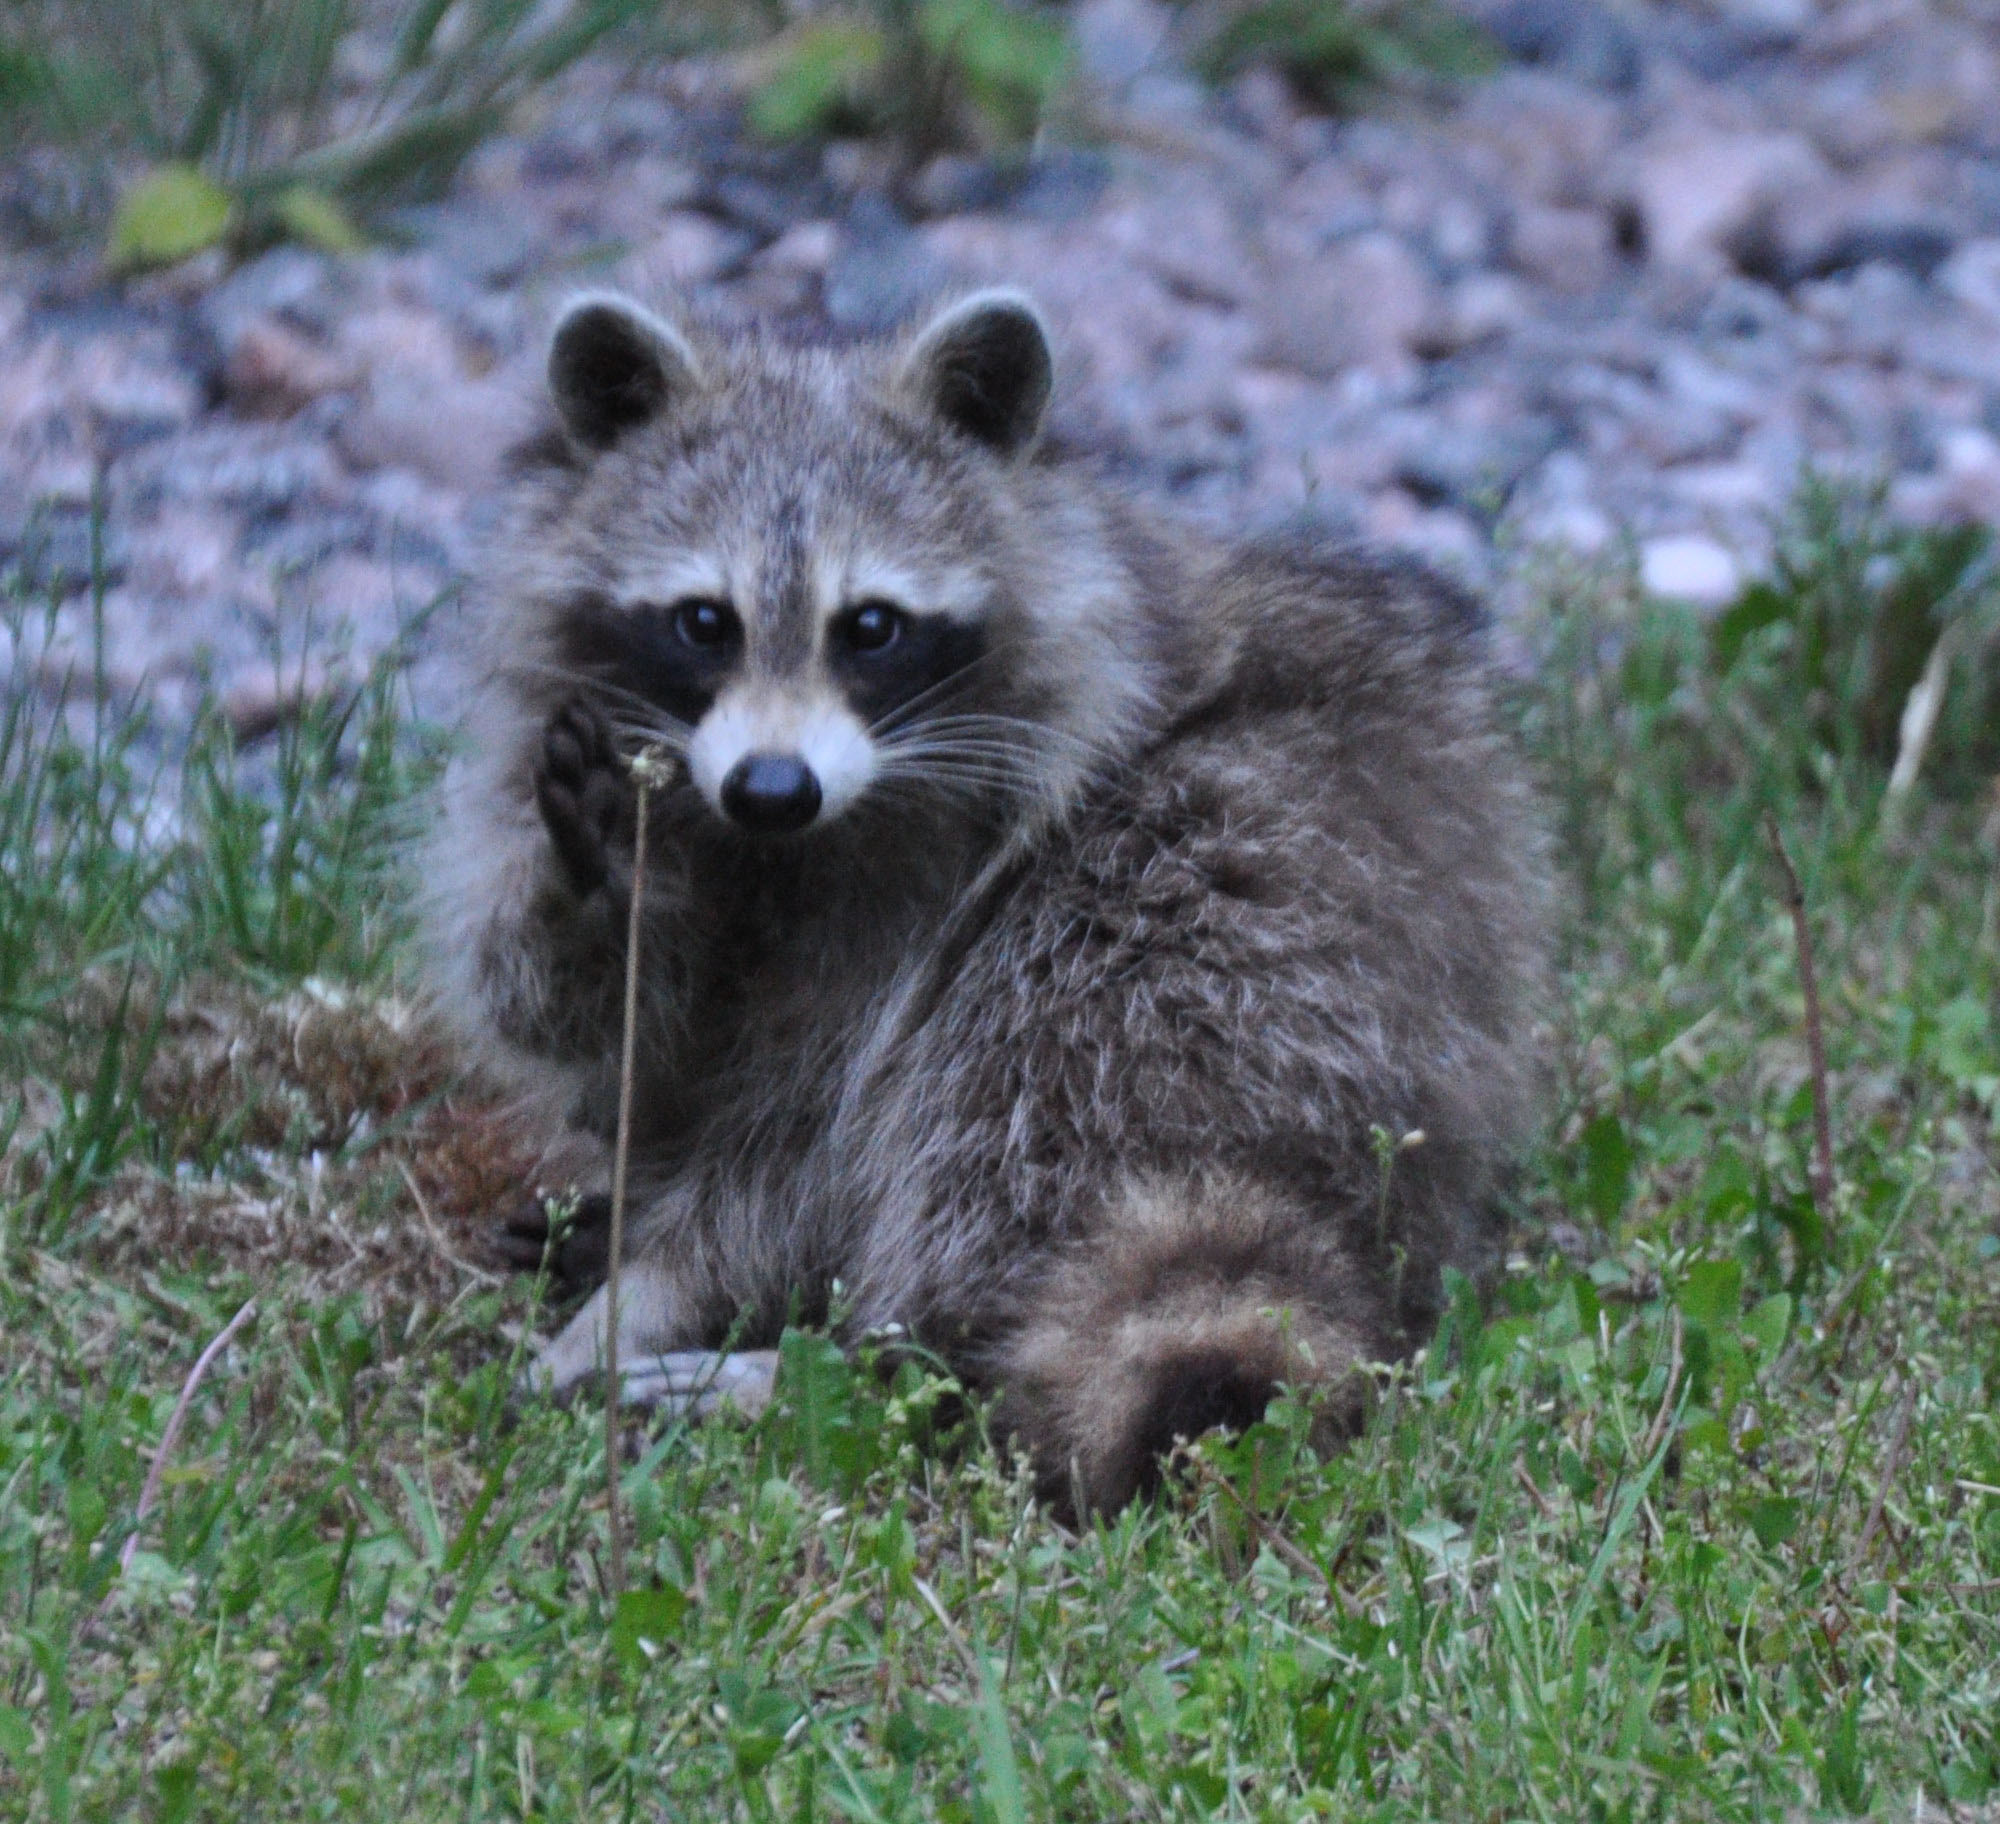 Raccoon in grassy area